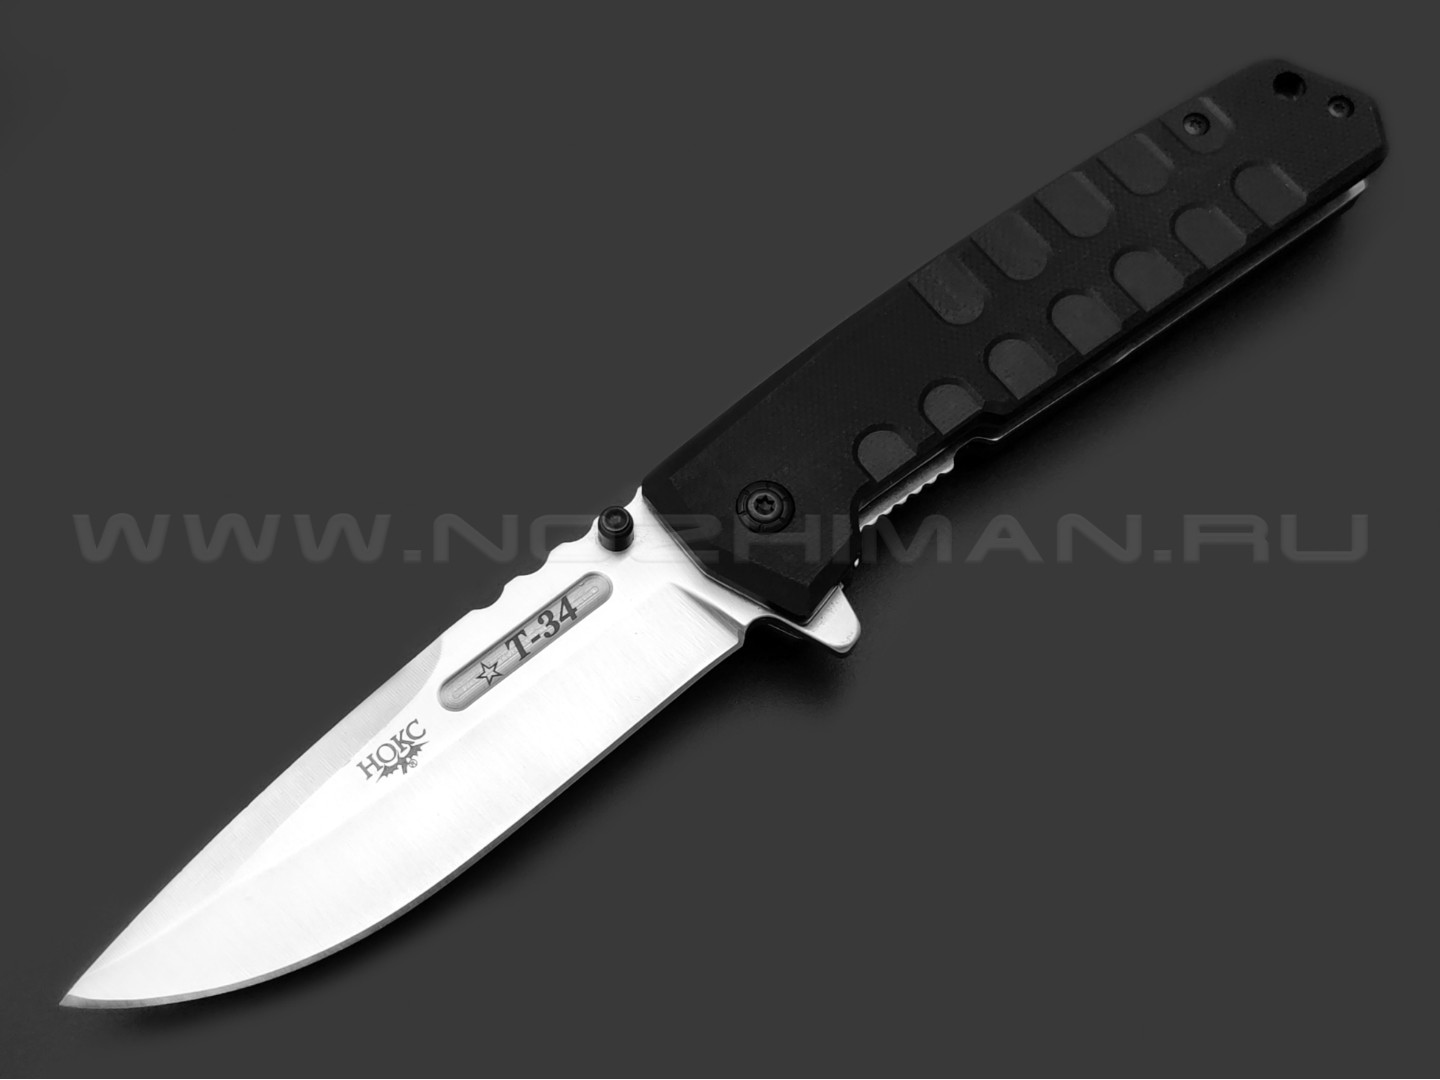 Нокс складной нож Т-34 323-180401 сталь Aus-8 satin, рукоять G10 black